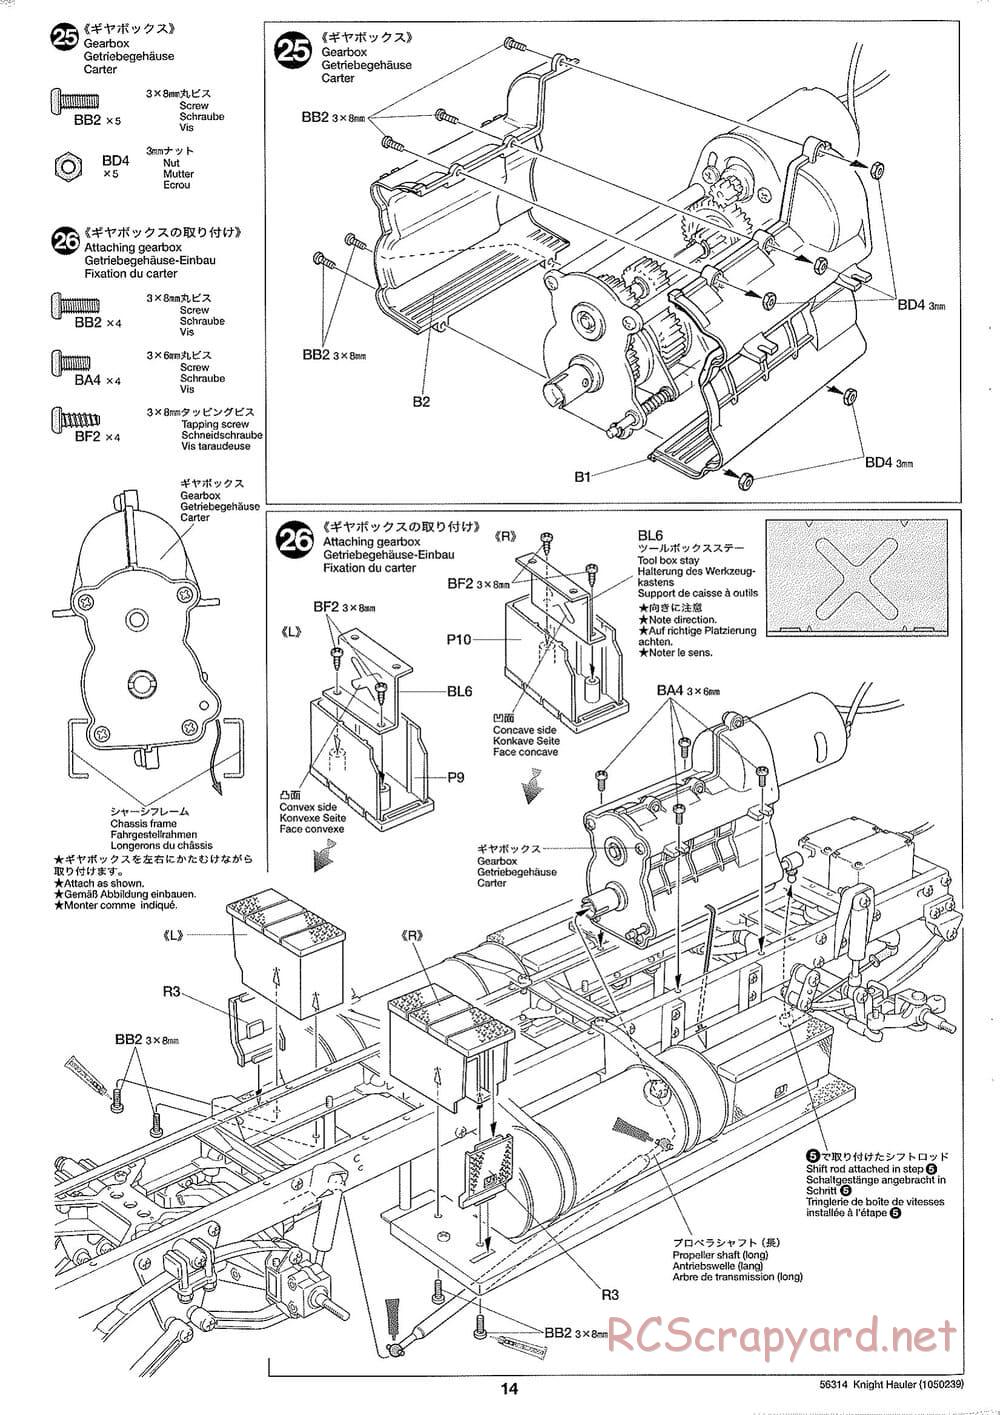 Tamiya - Knight Hauler Tractor Truck Chassis - Manual - Page 14